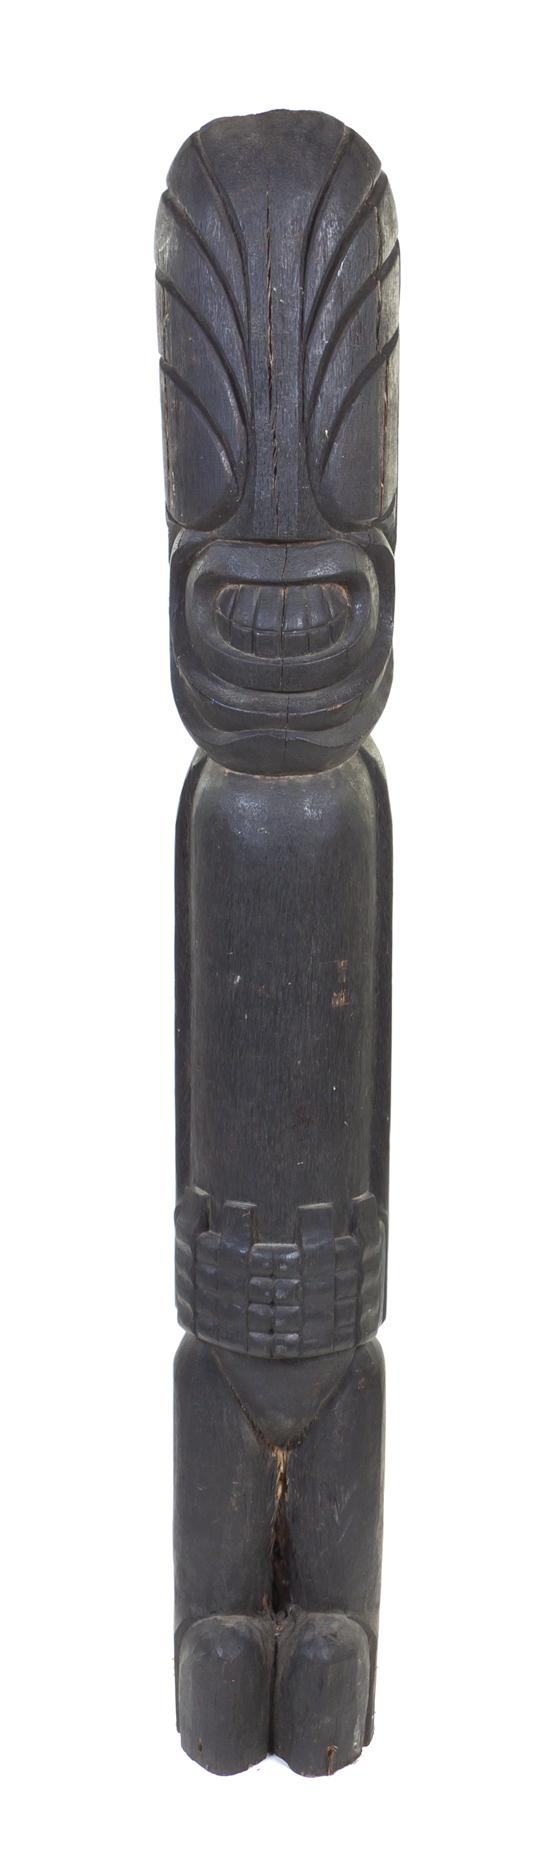 A Carved Wood Tiki Totem depicting 1554b9